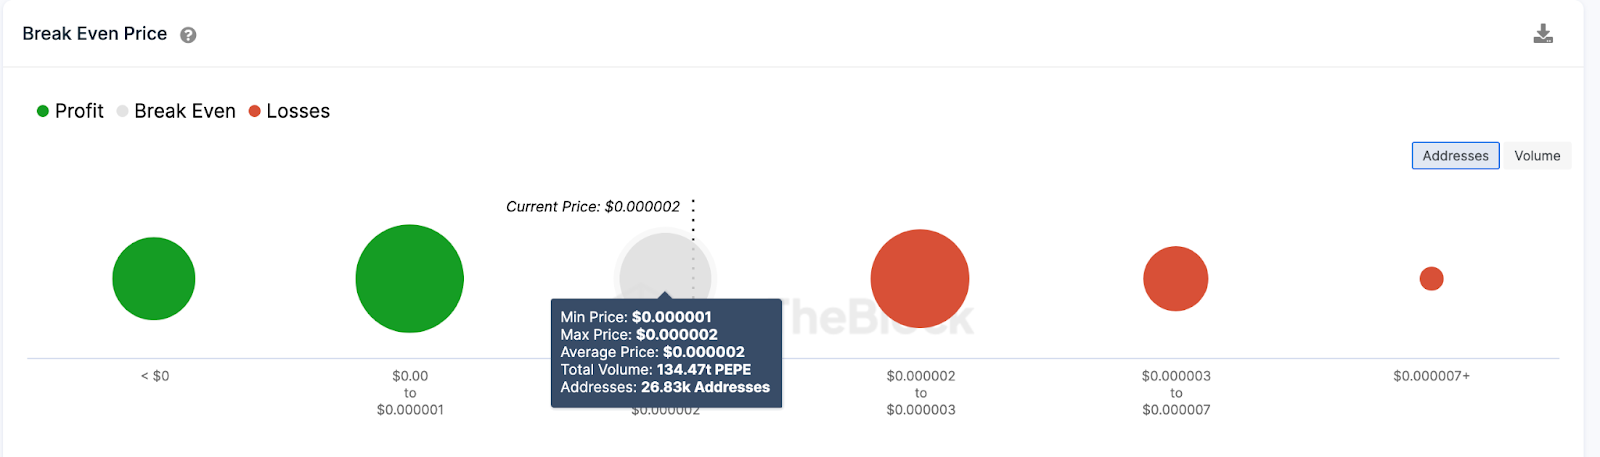 PEPE (PEPE) Price Prediction | Break-Even Price data, July 2023 | Source: IntoTheBlock